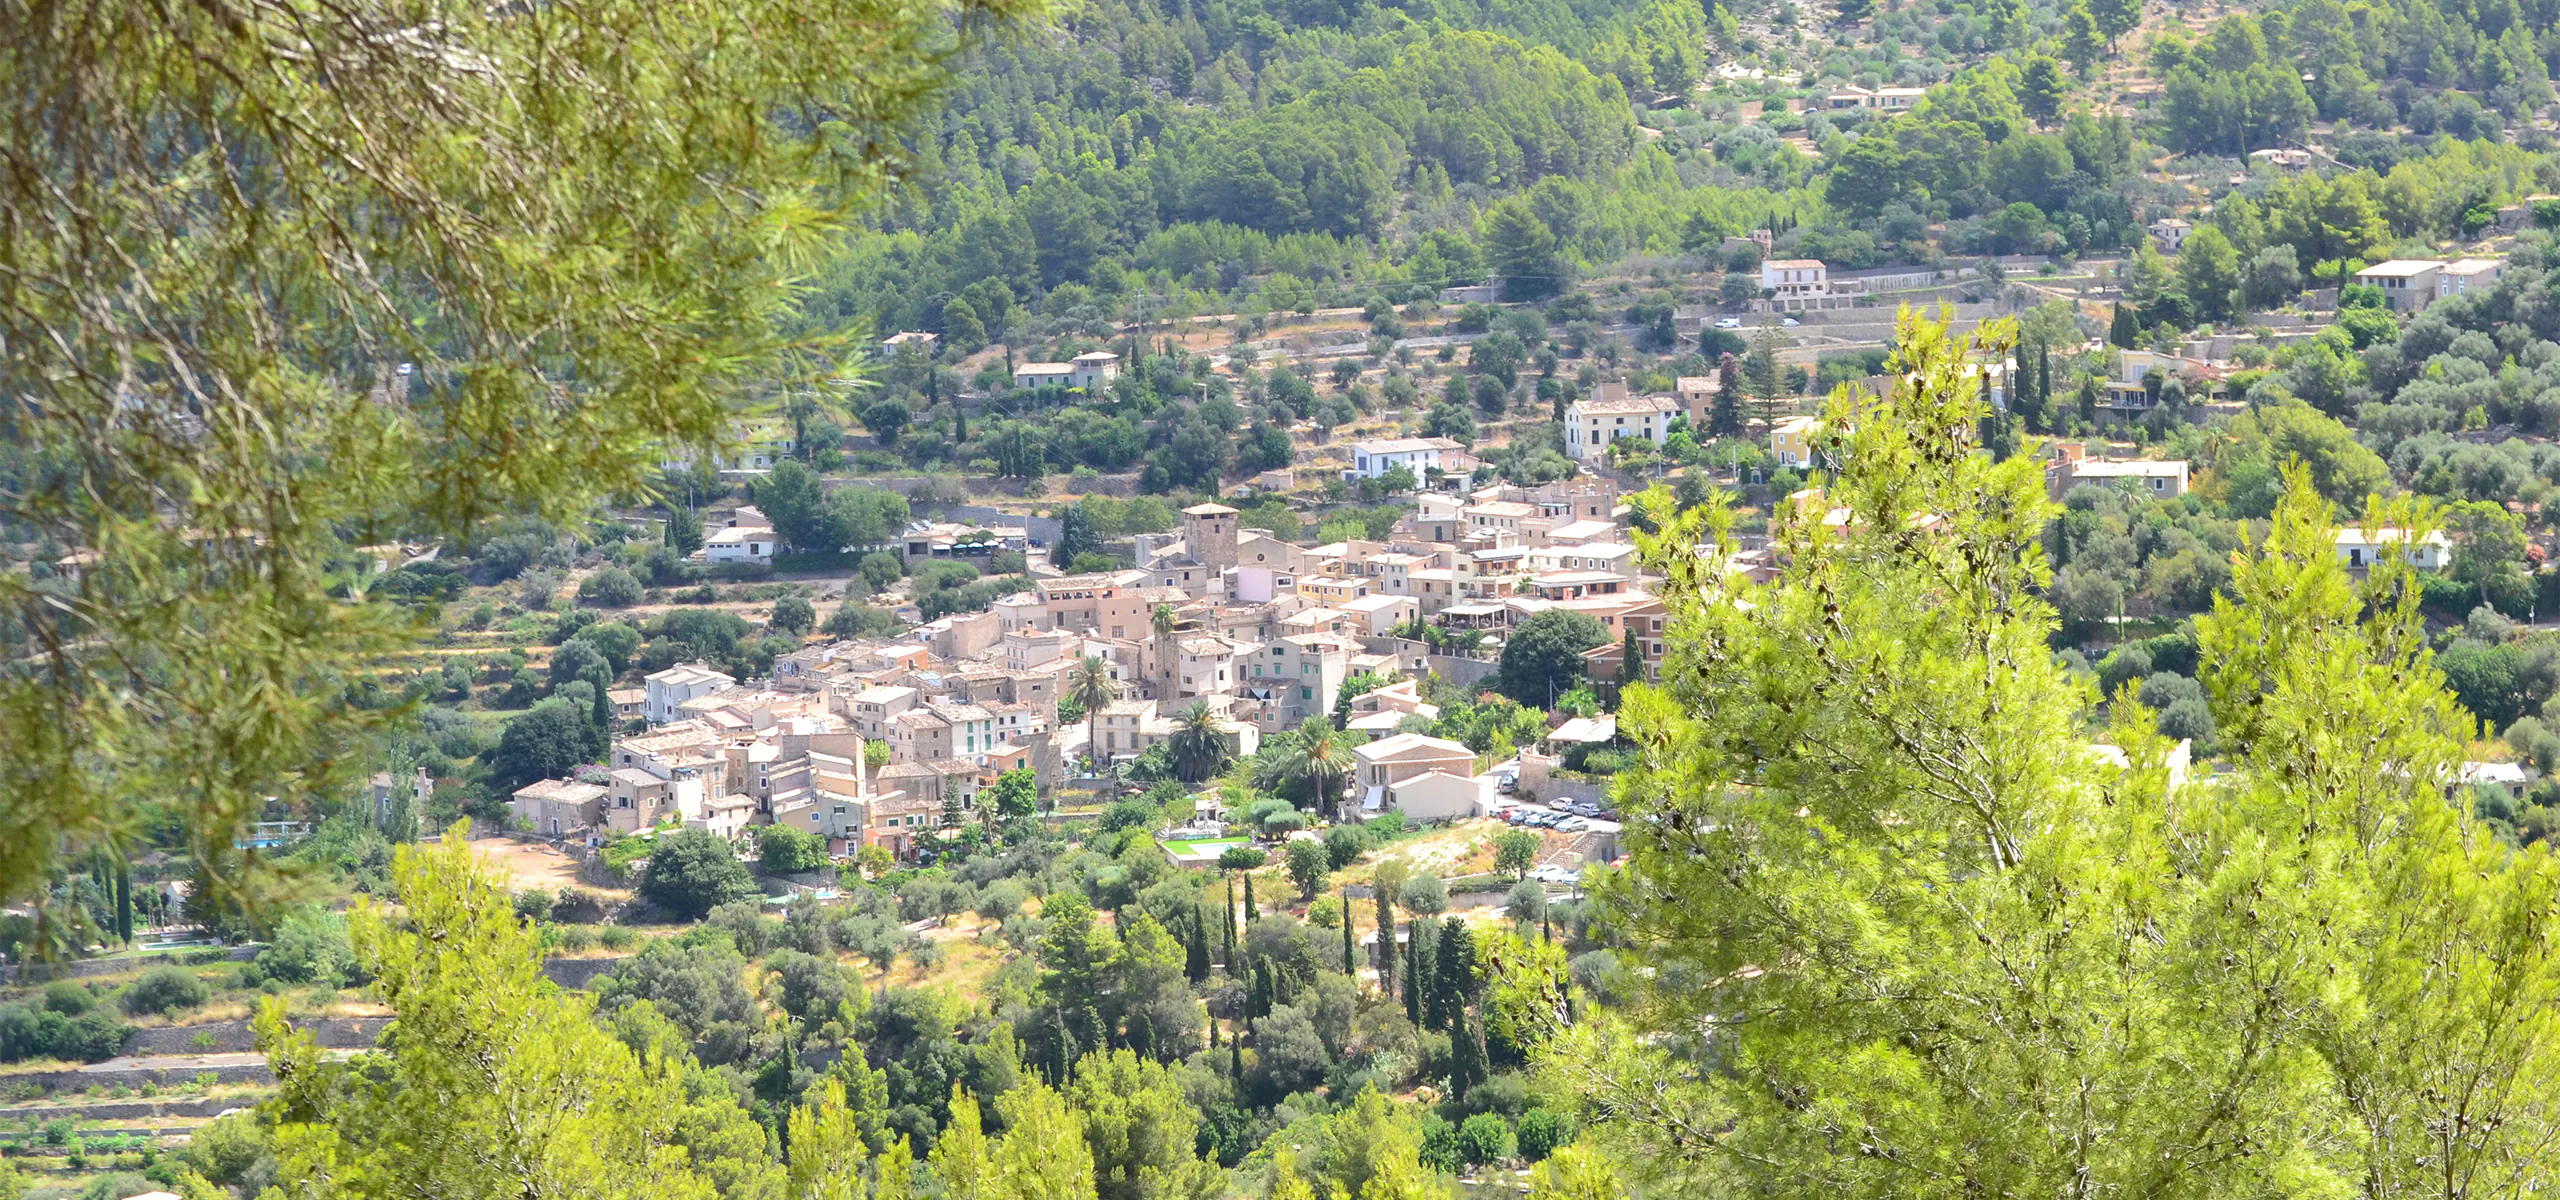 Vista del pueblo de Estellencs en plena Sierra de Tramuntana